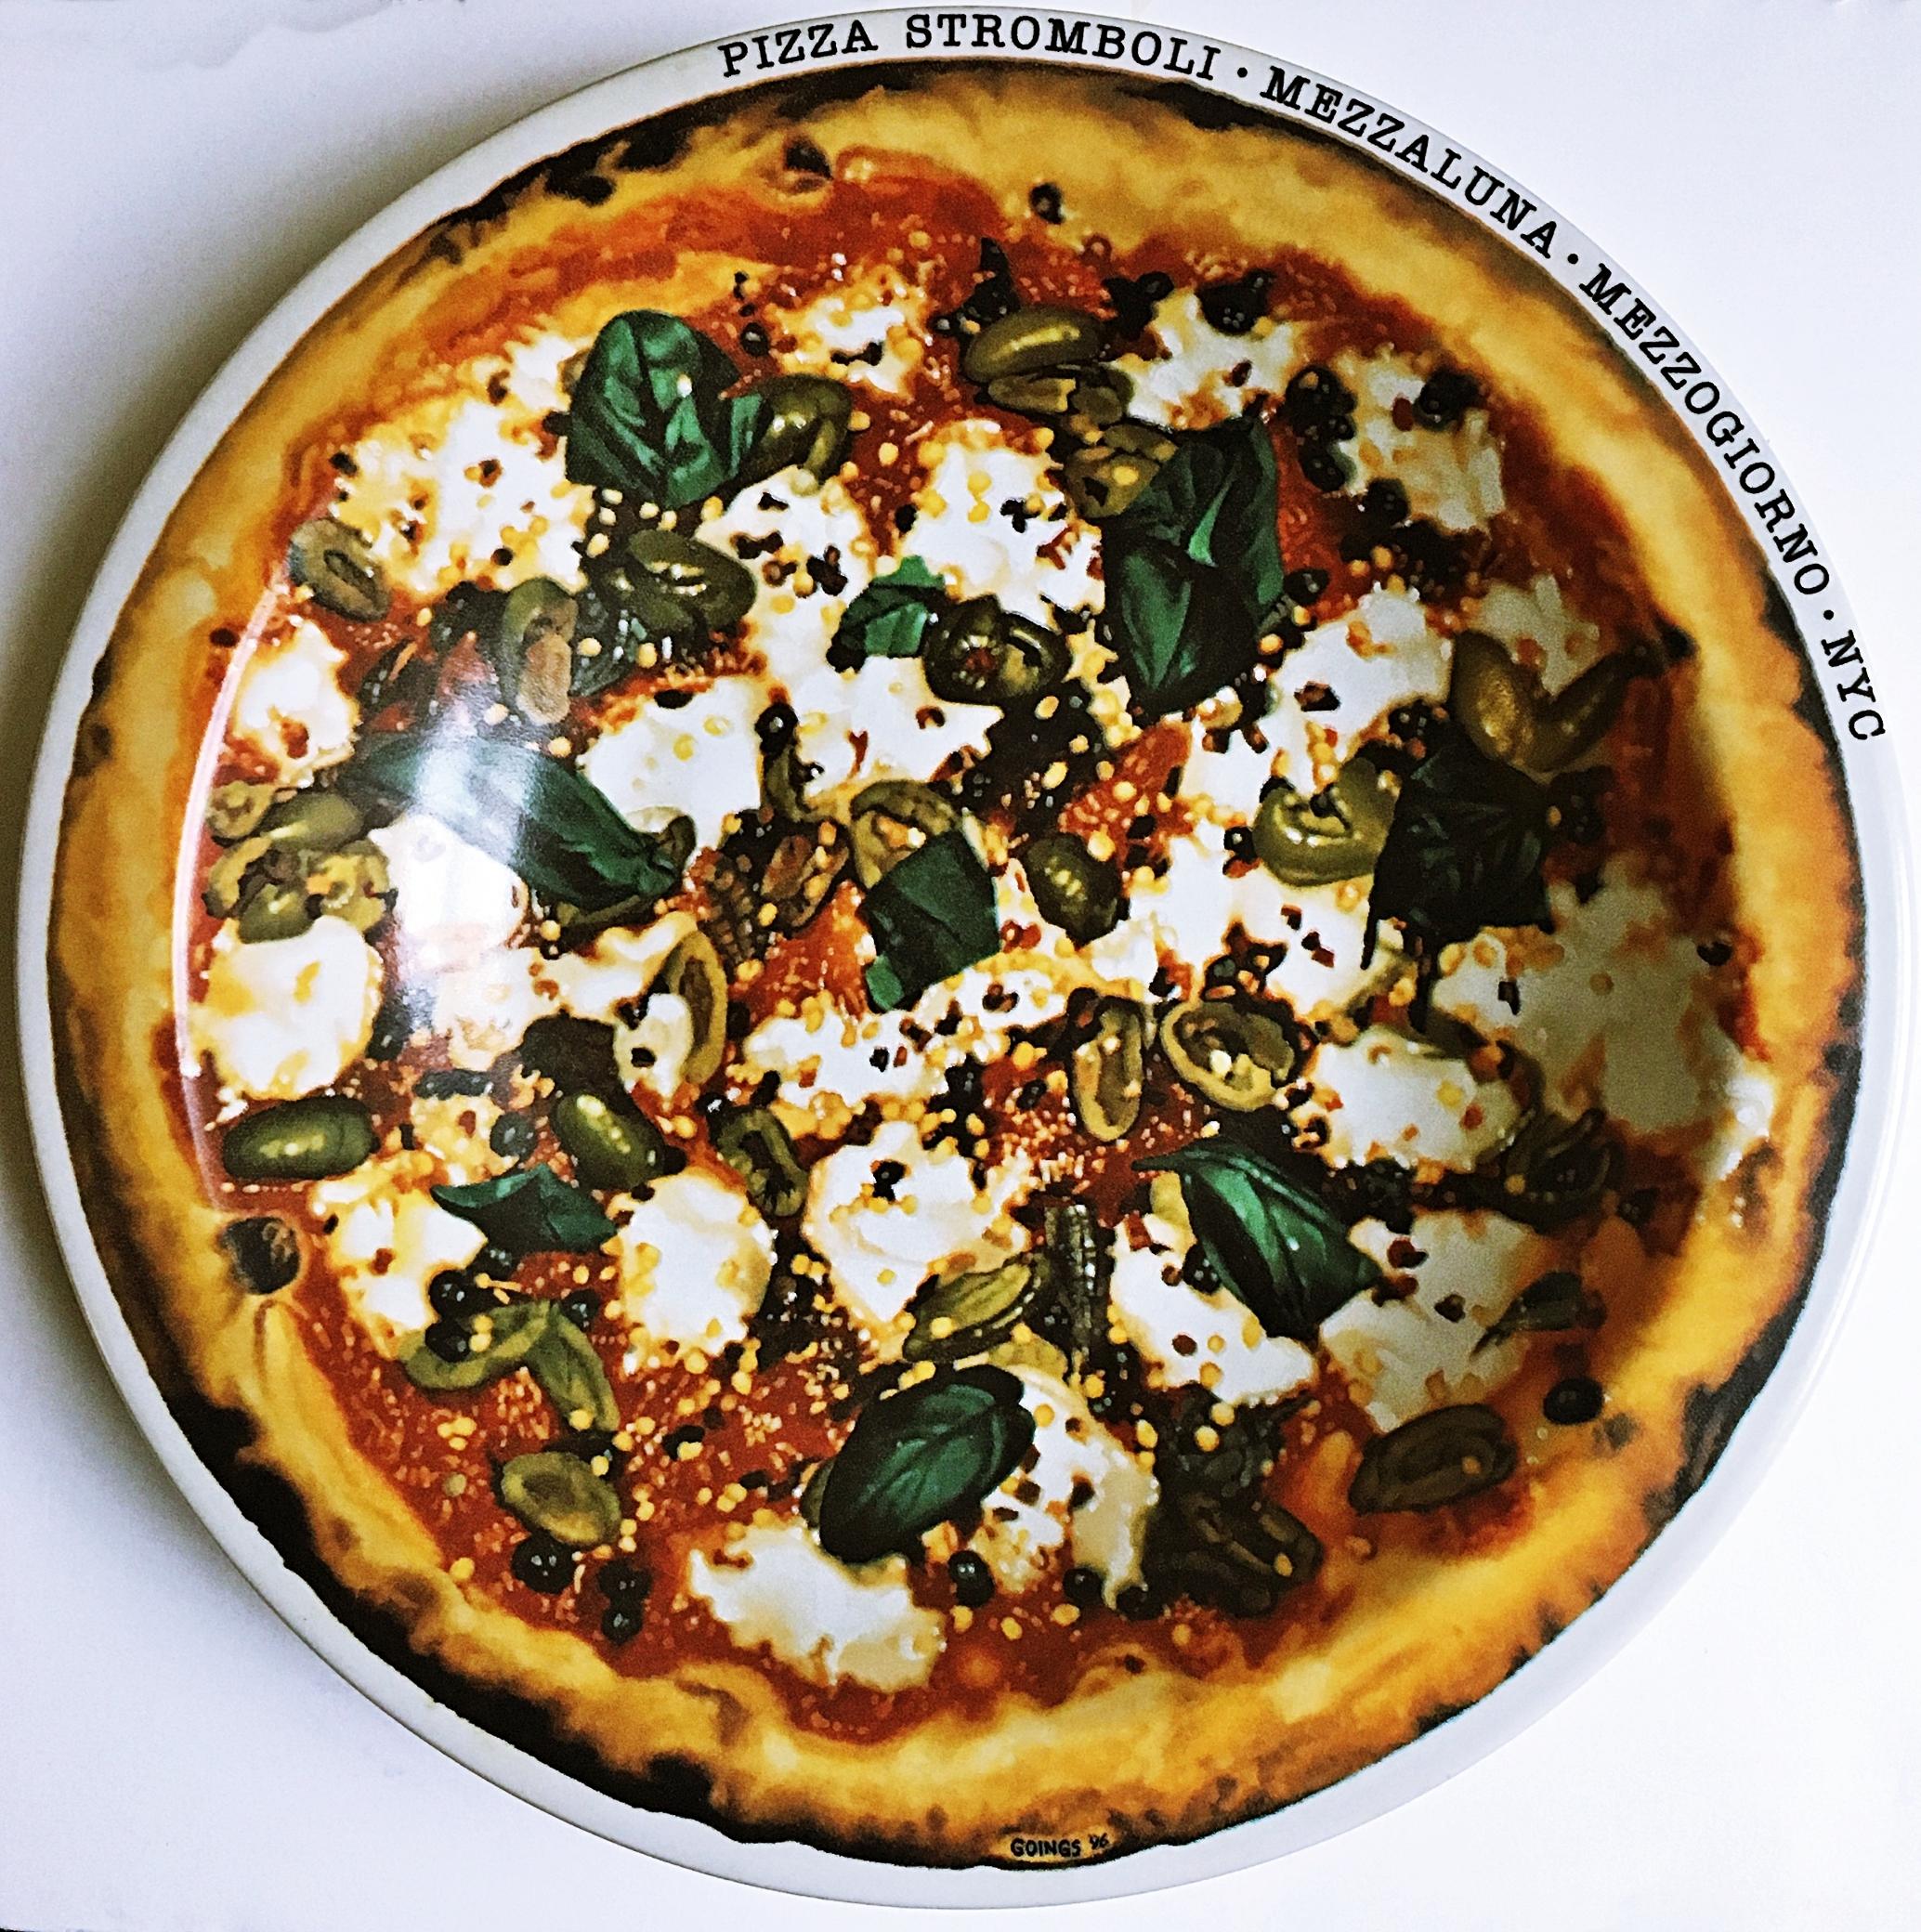 Art about Food Pizza Stromboli Mezzalluna - Mezzogiorno - New York, NY (plaque)  - Mixed Media Art de Ralph Goings